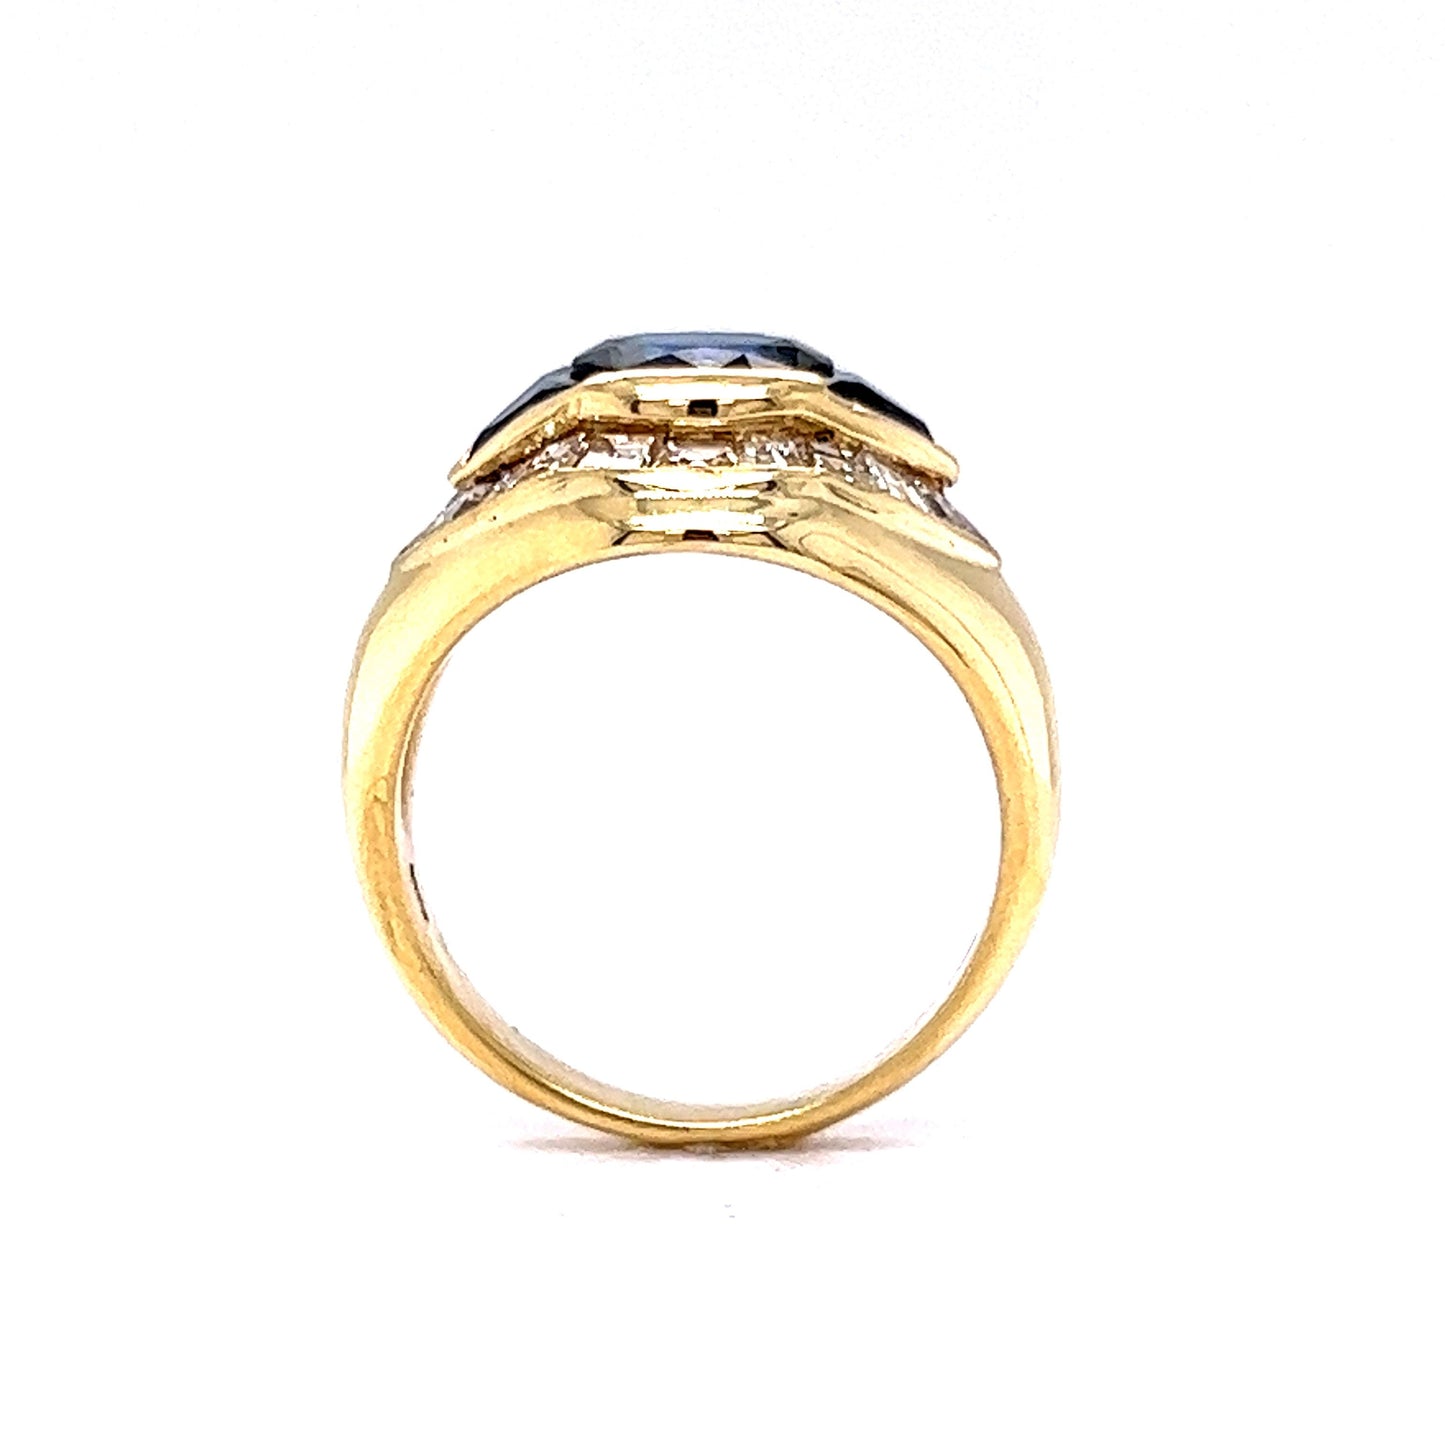 Bezel Set Sapphire & Diamond Cocktail Ring in 18k Yellow Gold